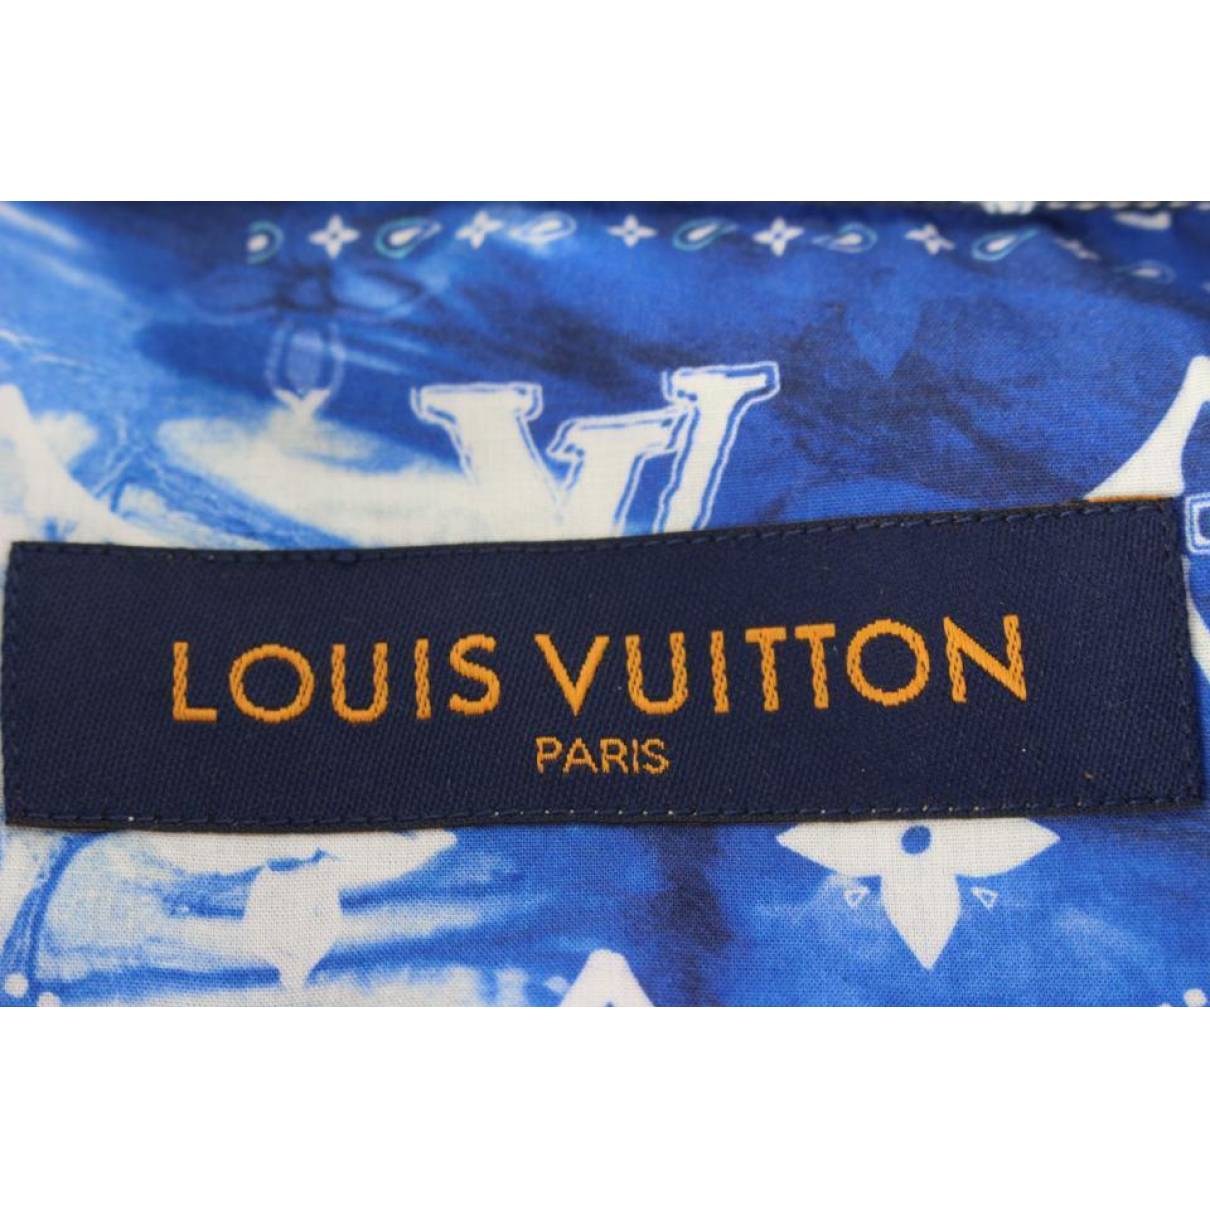 T-shirt Louis Vuitton Blue size L International in Cotton - 34458659